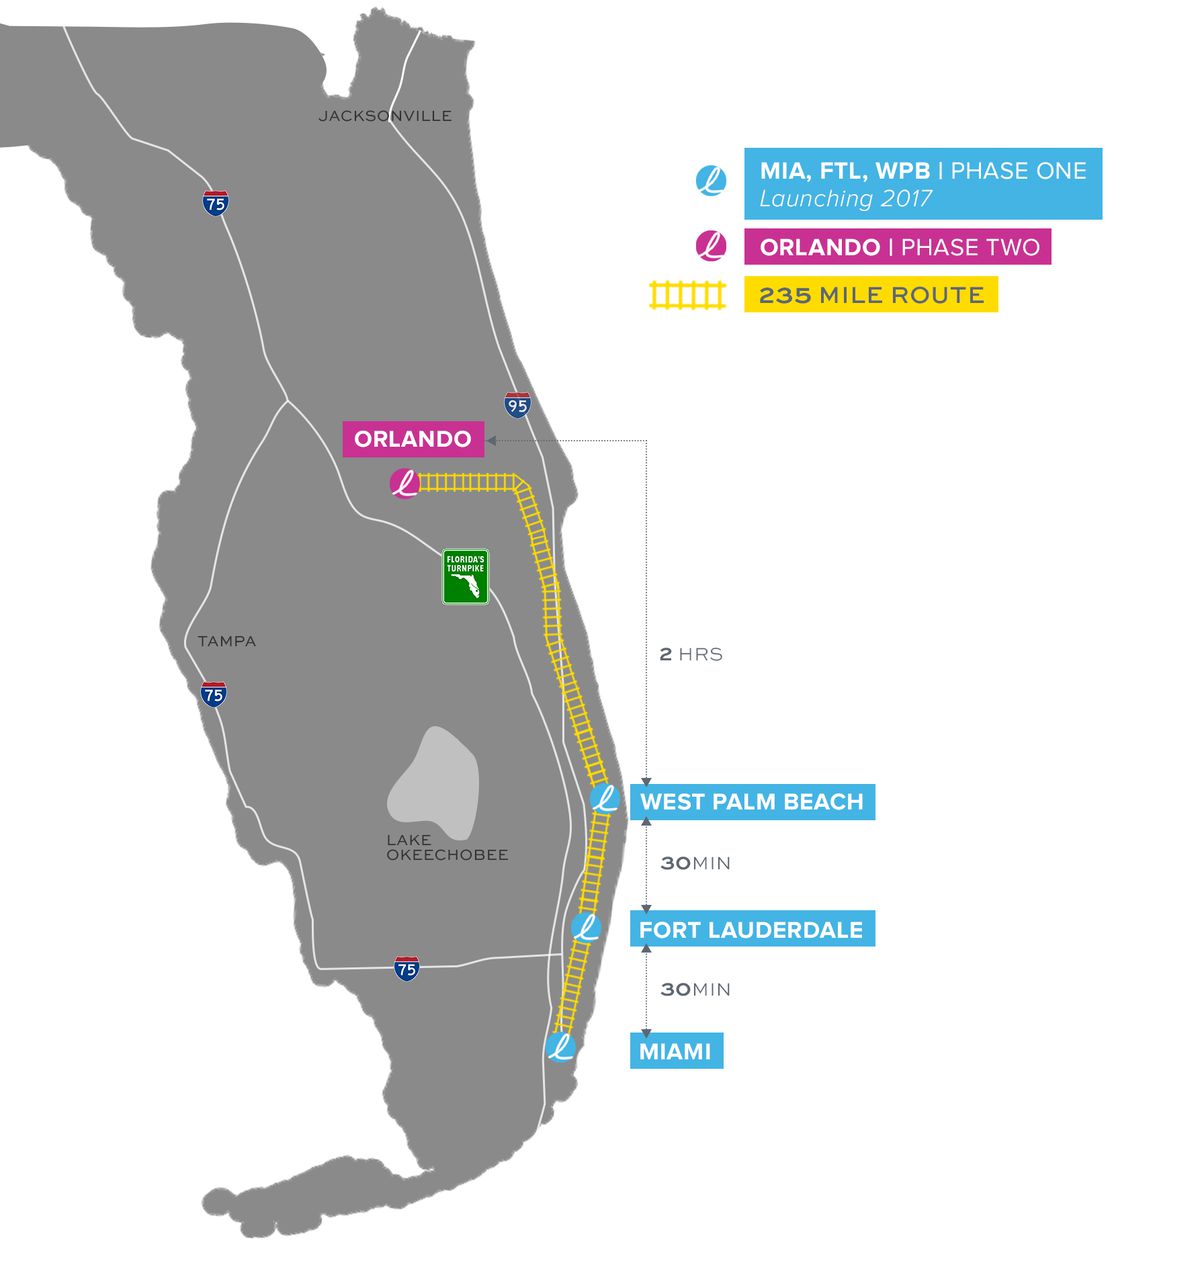 brightline, florida's new high-speed rail system, set to